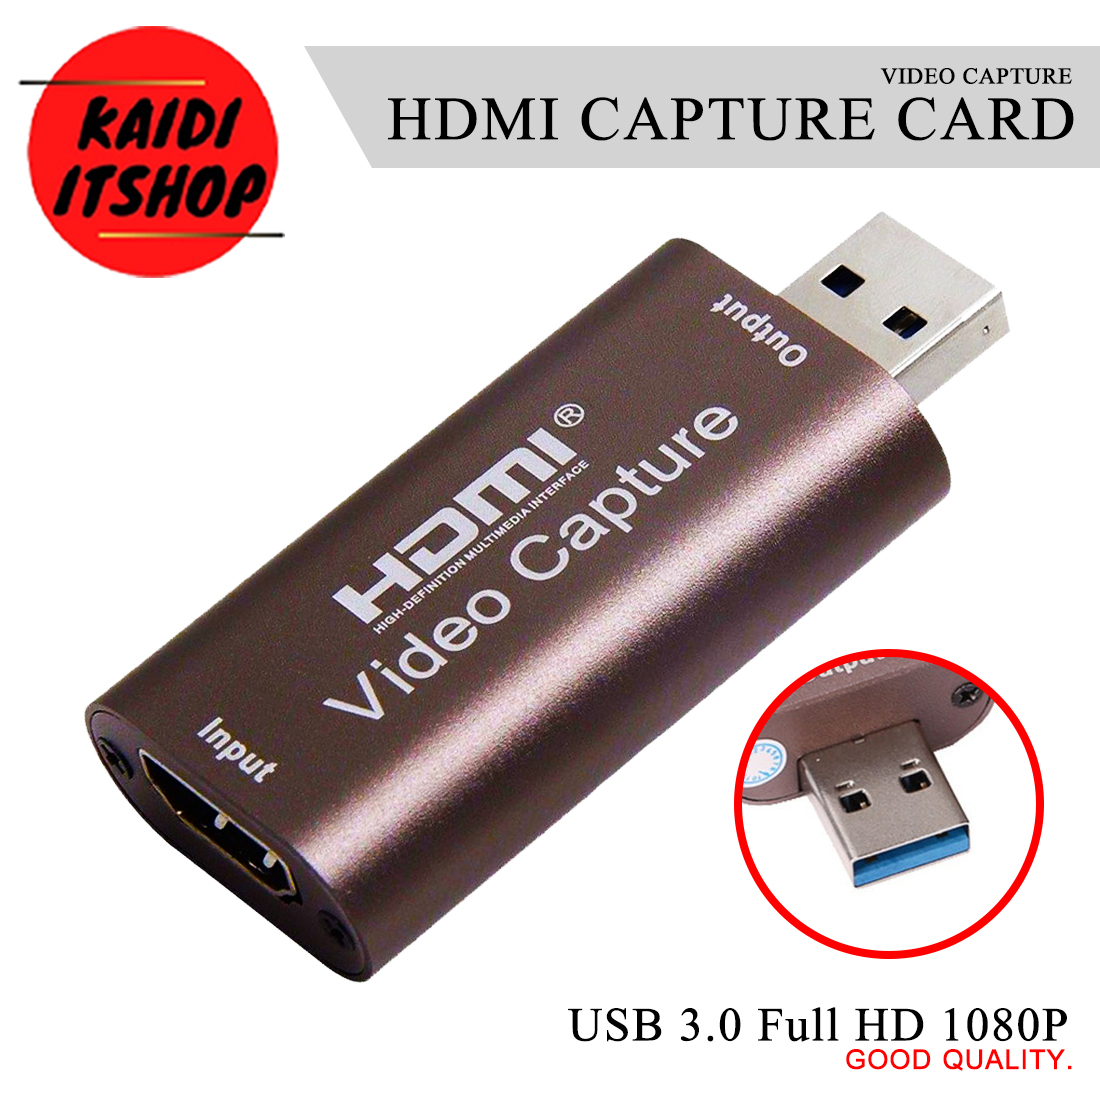 HDMI Video Capture Card USB 3.0 แคปเจอร์การ์ด รองรับภาพ Full HD 1080P (Color: Rose Gold)